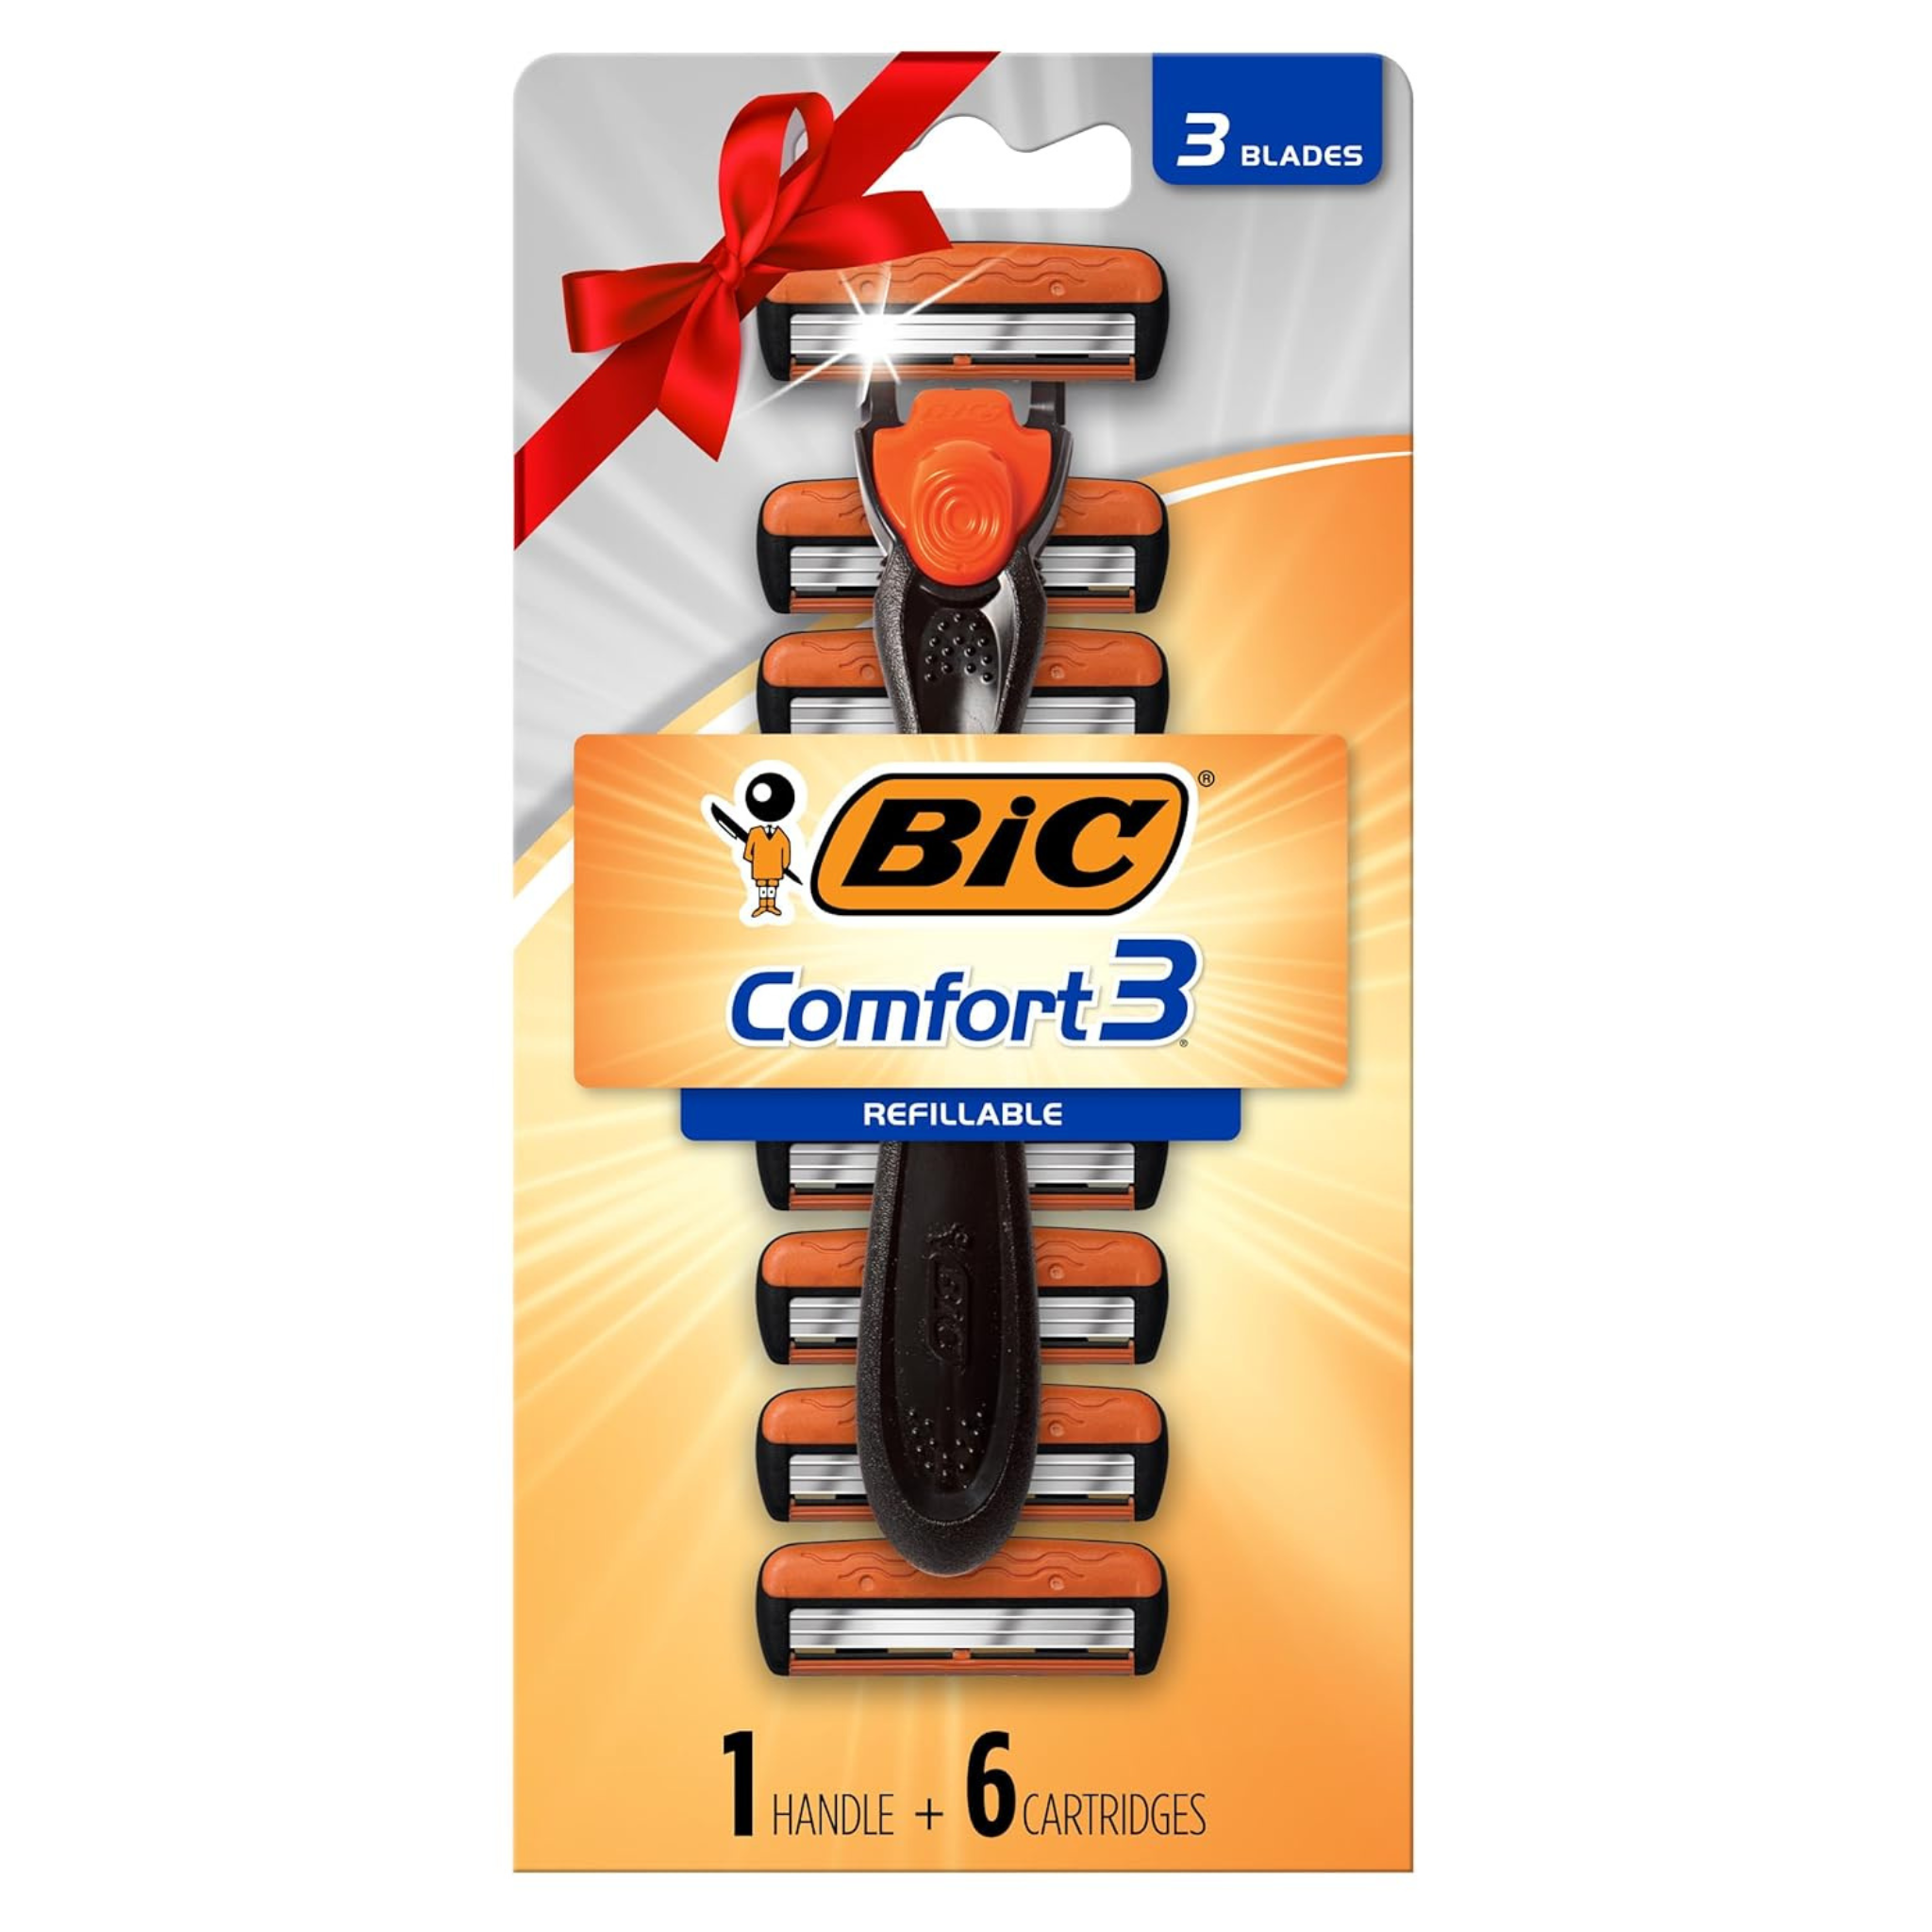 BIC Comfort 3 Hybrid Men's Disposable Razor (1 Handle w/ 6 Cartridges)